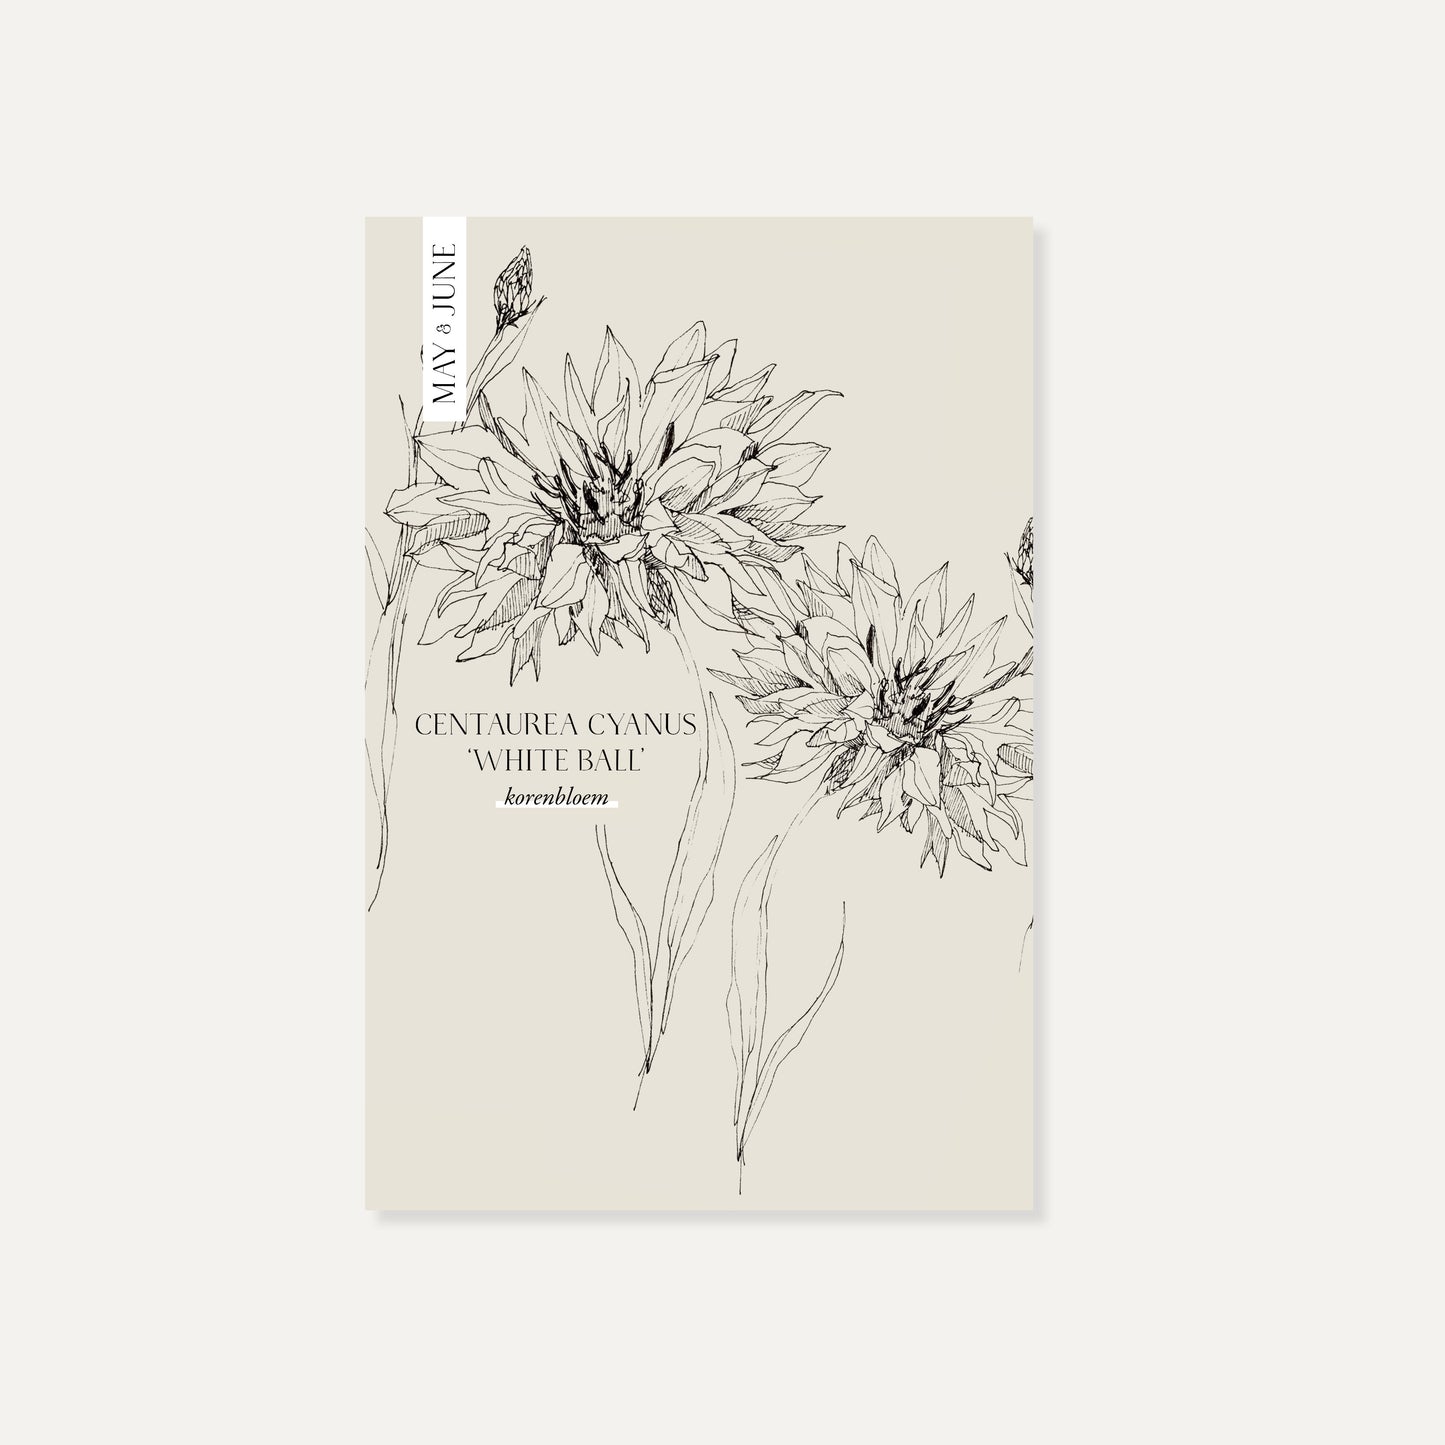 Centaurea cyanus ‘White Ball’ (korenbloem)